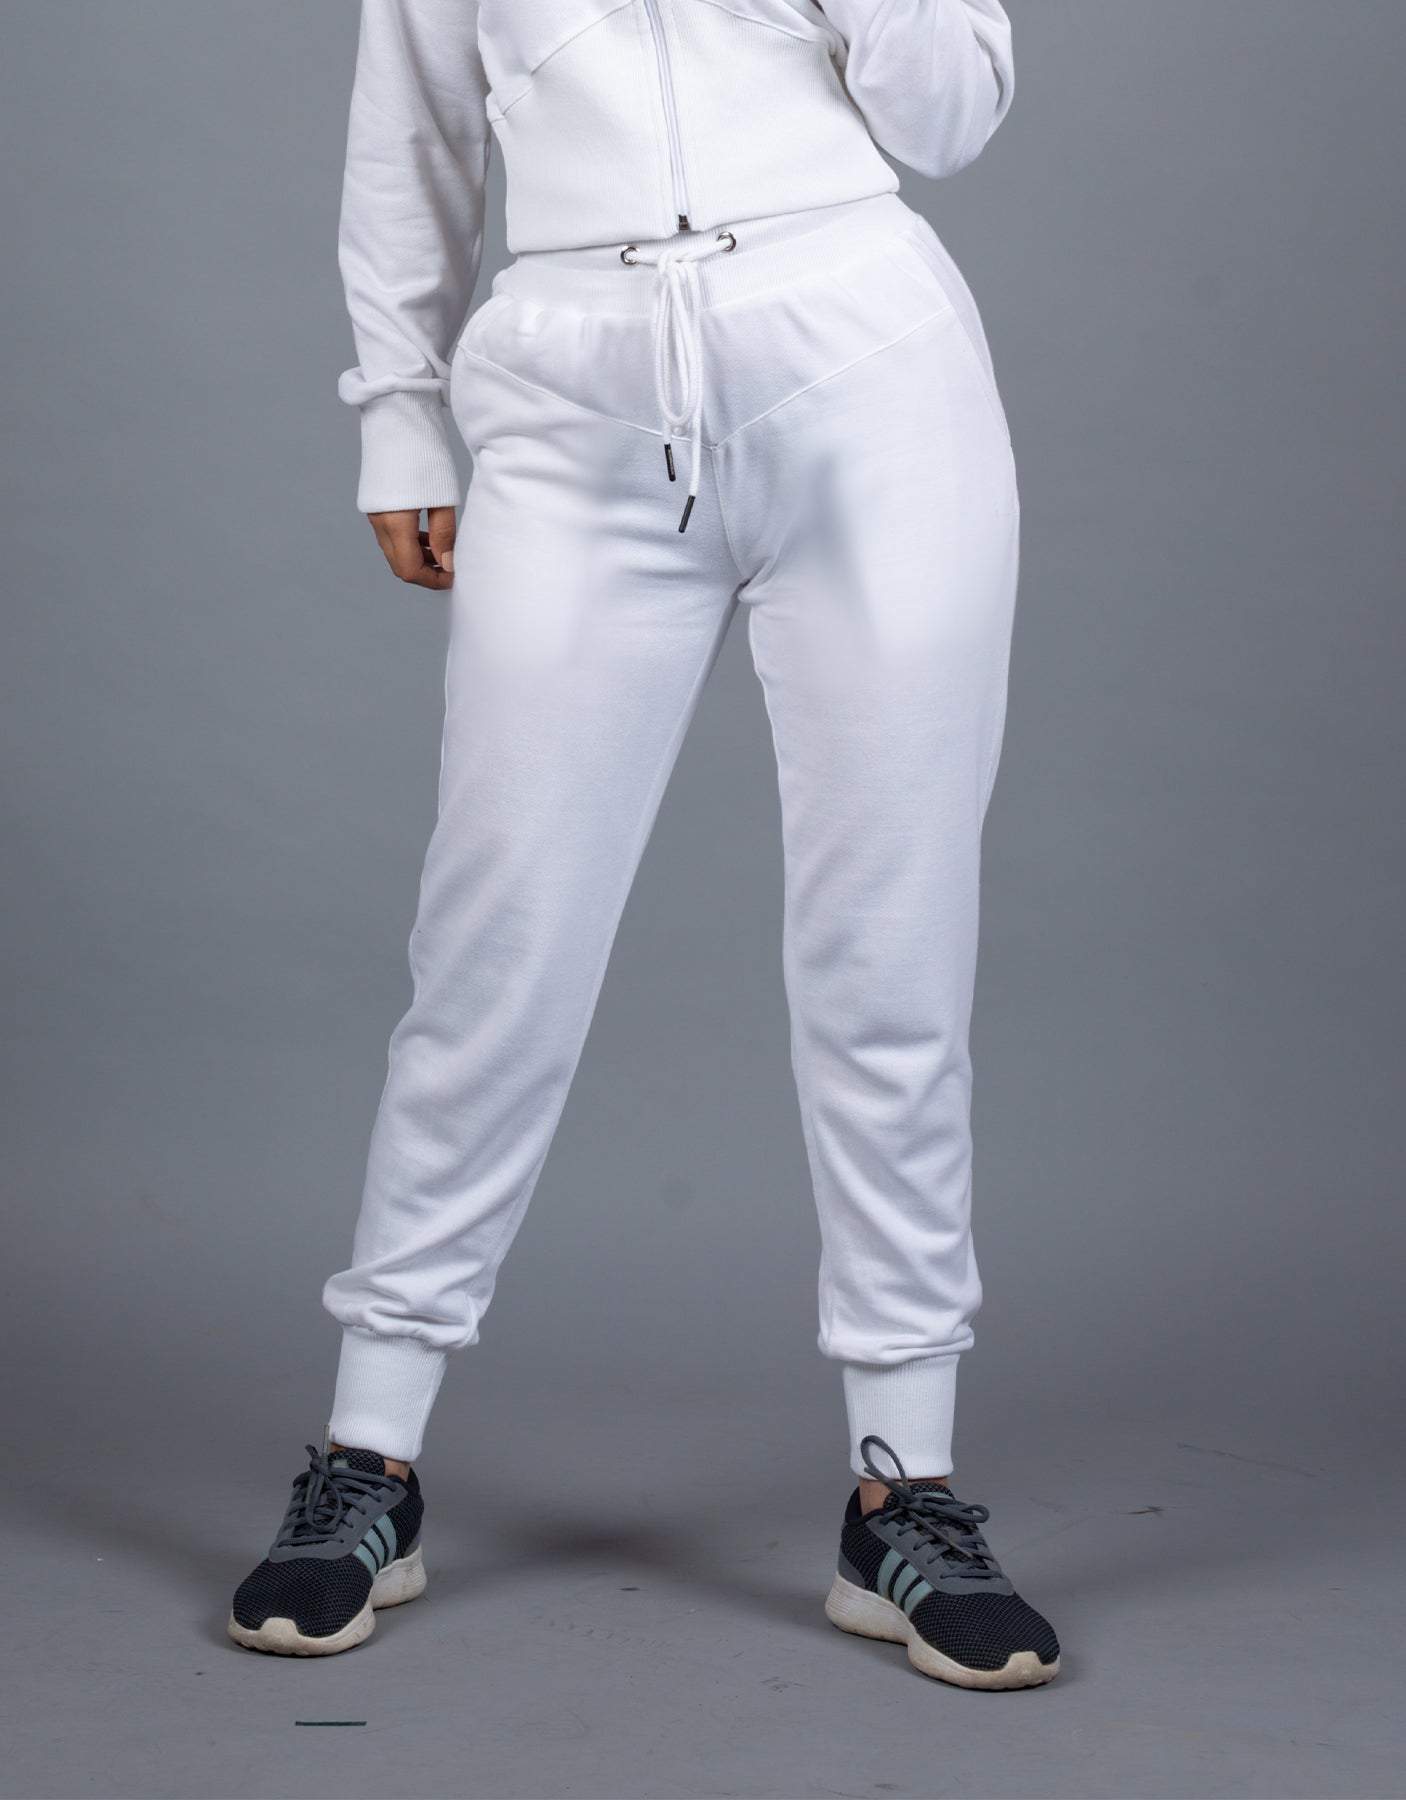 Slender Waisted Jogger Pants White-Bodybrics-propel-discount-8233